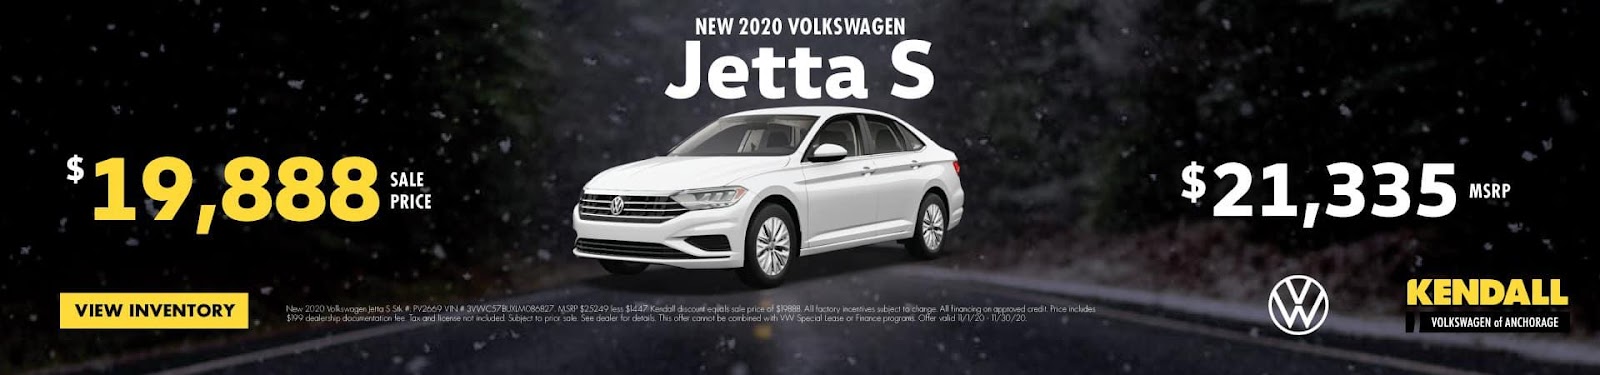 Volkswagen Jetta advertisement.